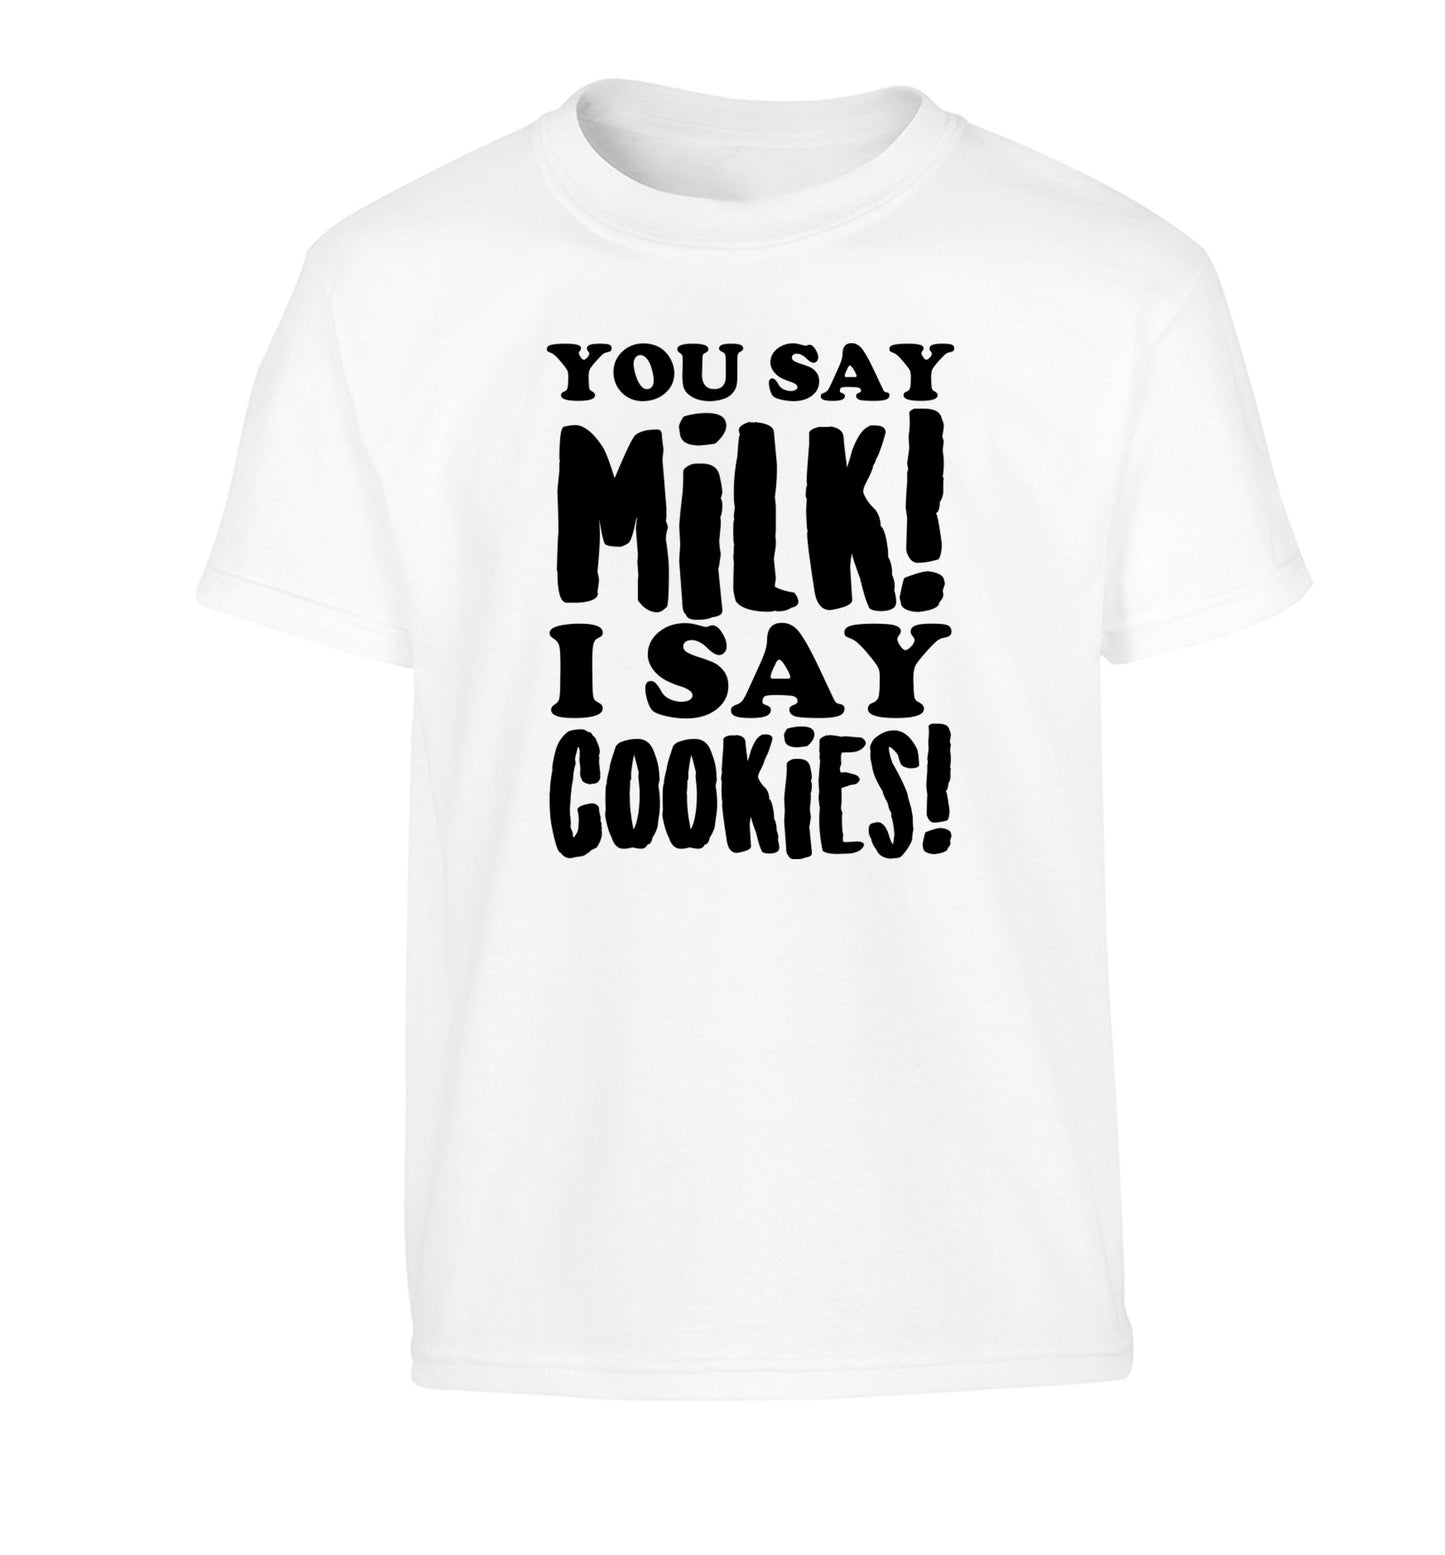 You say milk I say cookies! Children's white Tshirt 12-14 Years